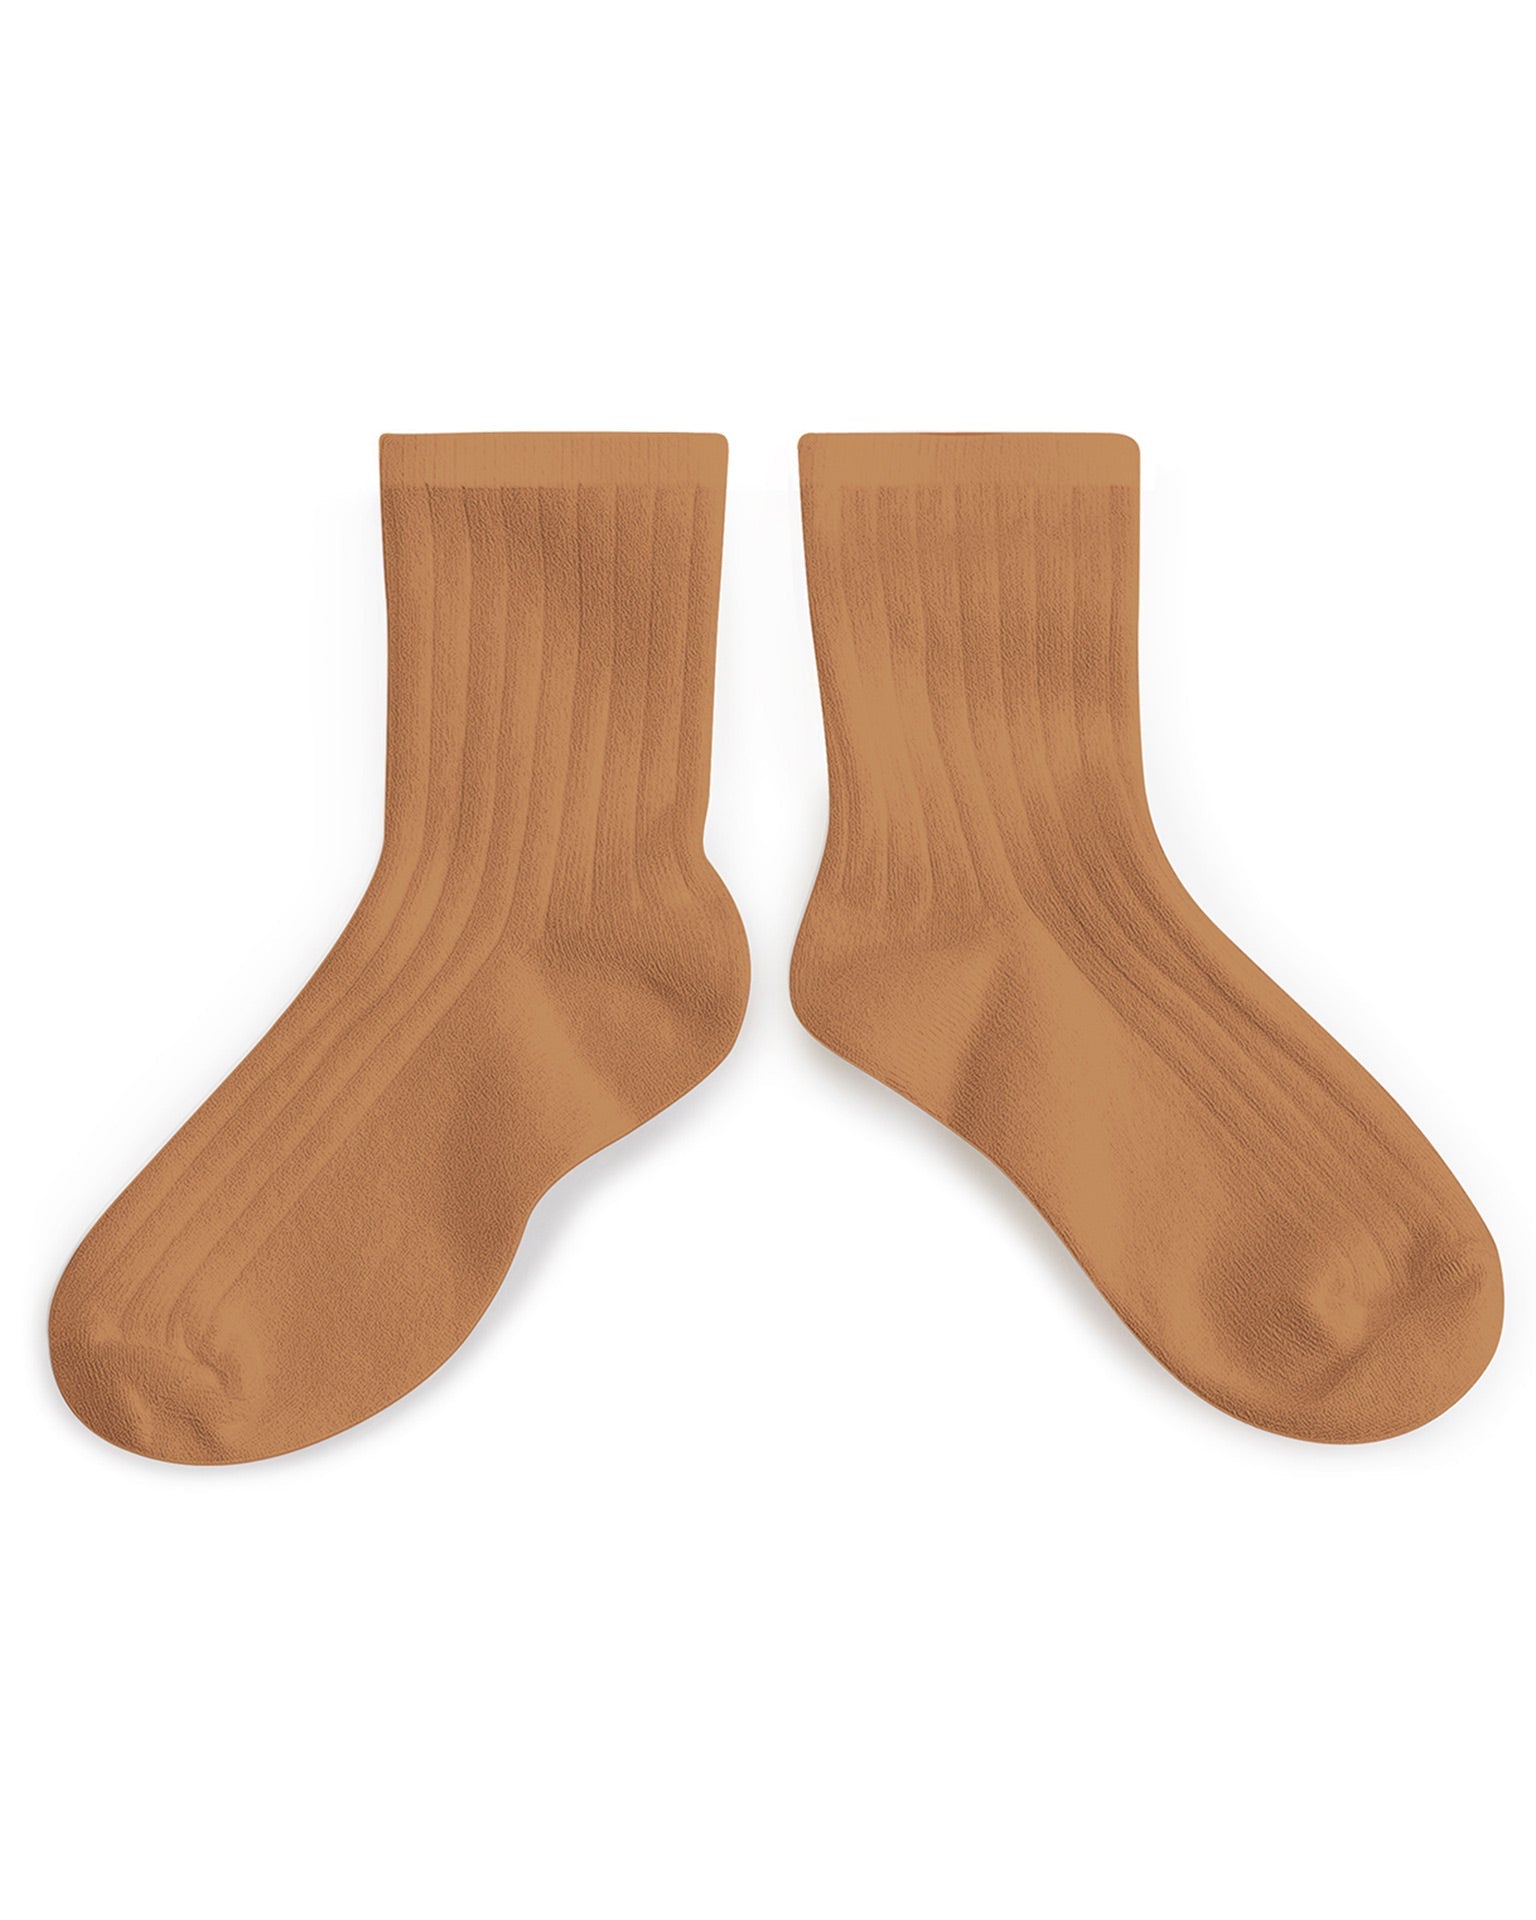 Little collegien accessories la mini ankle socks in caramel au beurre sale